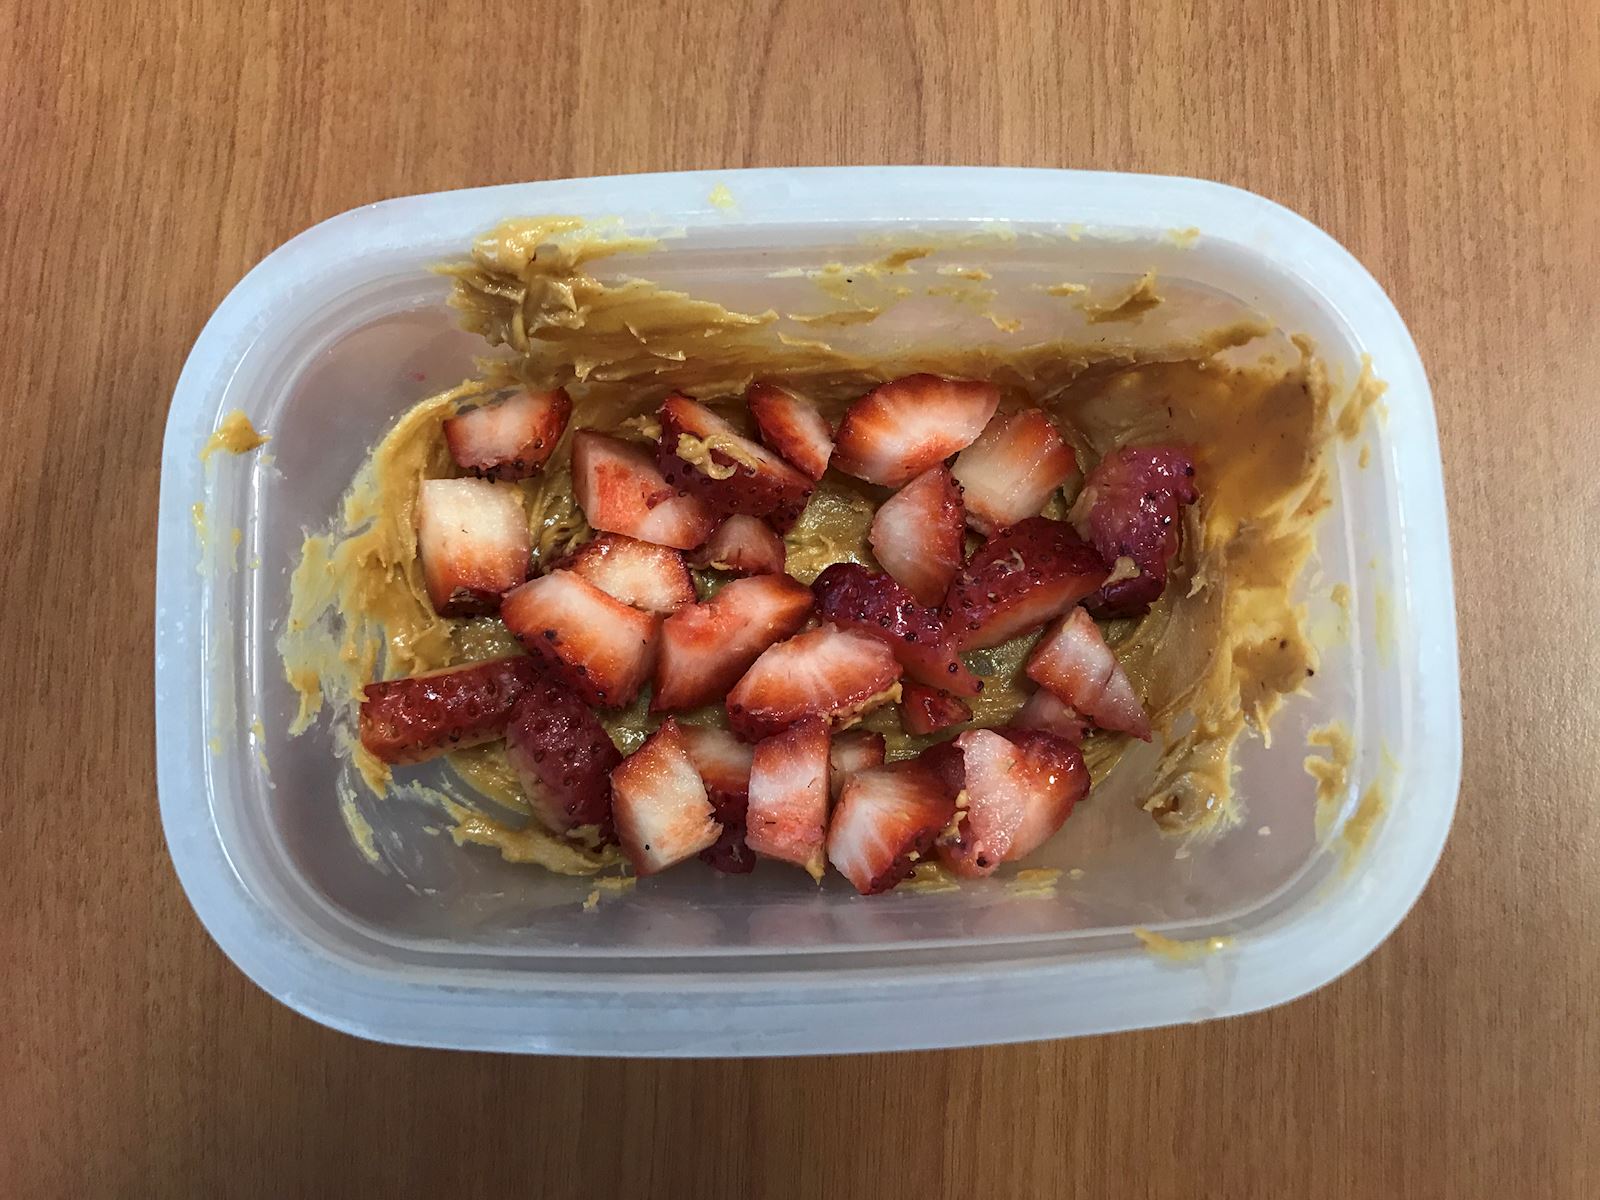 strawberries on peanut butter in tupperware